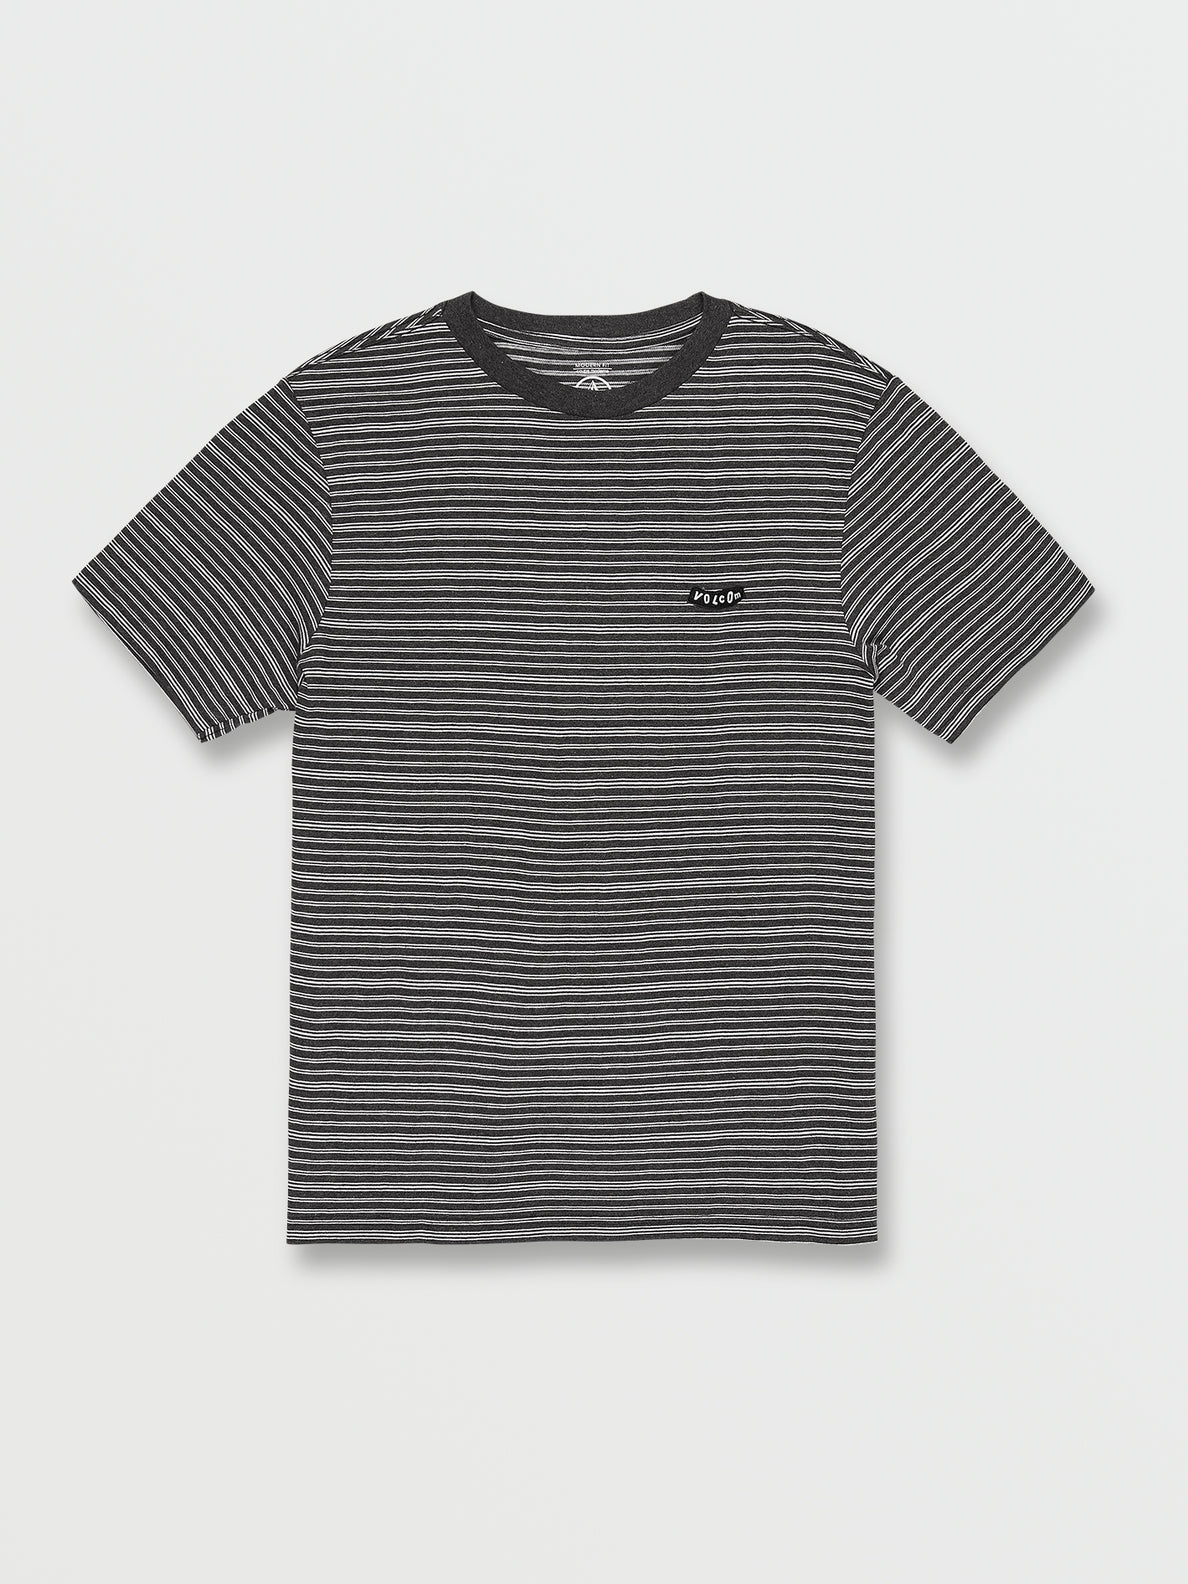 Static Stripe Crew Short Sleeve Shirt - Black (A0112302_BLK) [F]